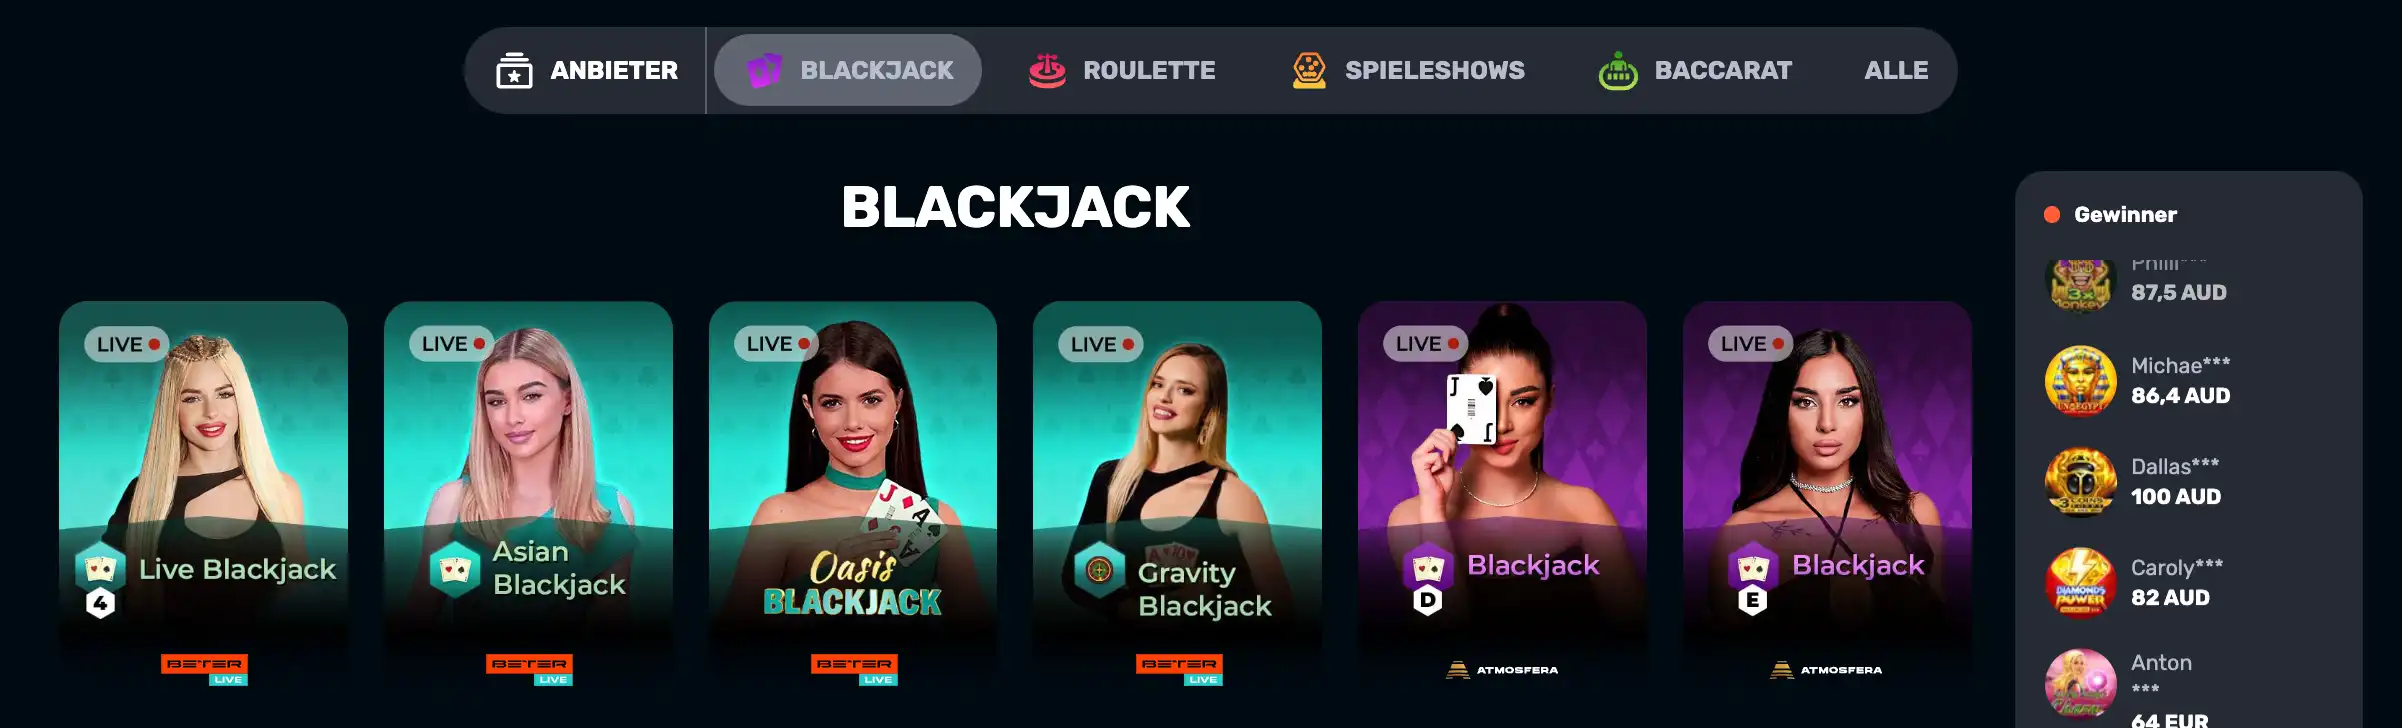 rocket play casino live blackjack